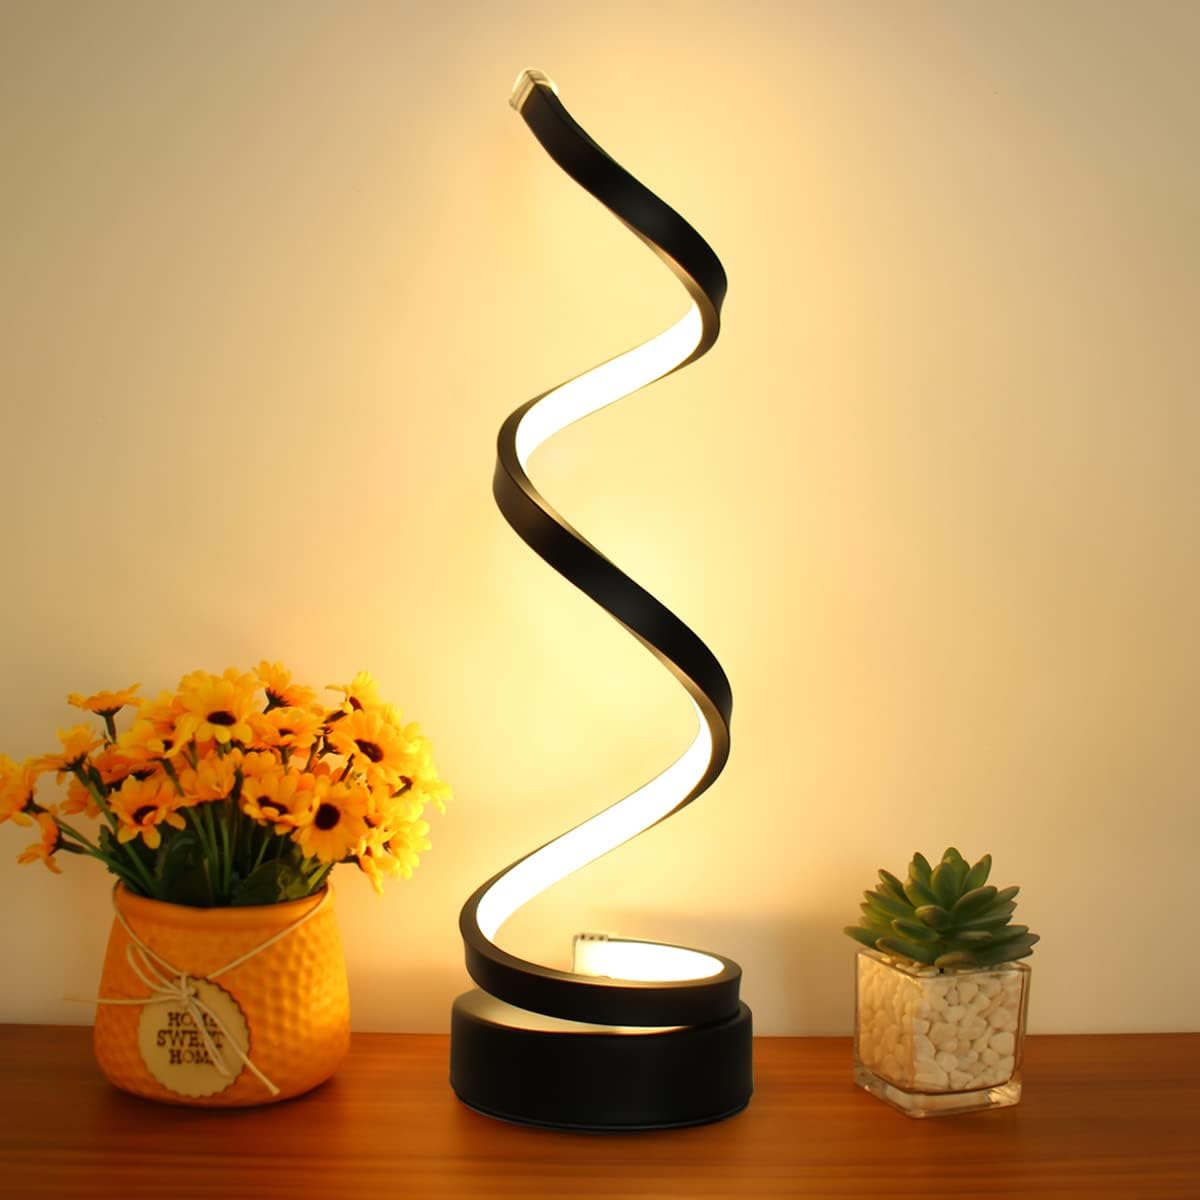 LENIVER LED Table Lamp, Modern Minimalist Dimmable Spiral Table Lamp, 12W 3 Color Bedside Lamp Desk Light for Bedroom, Living Room, Office, Nightstand, Bookshelf (Black)